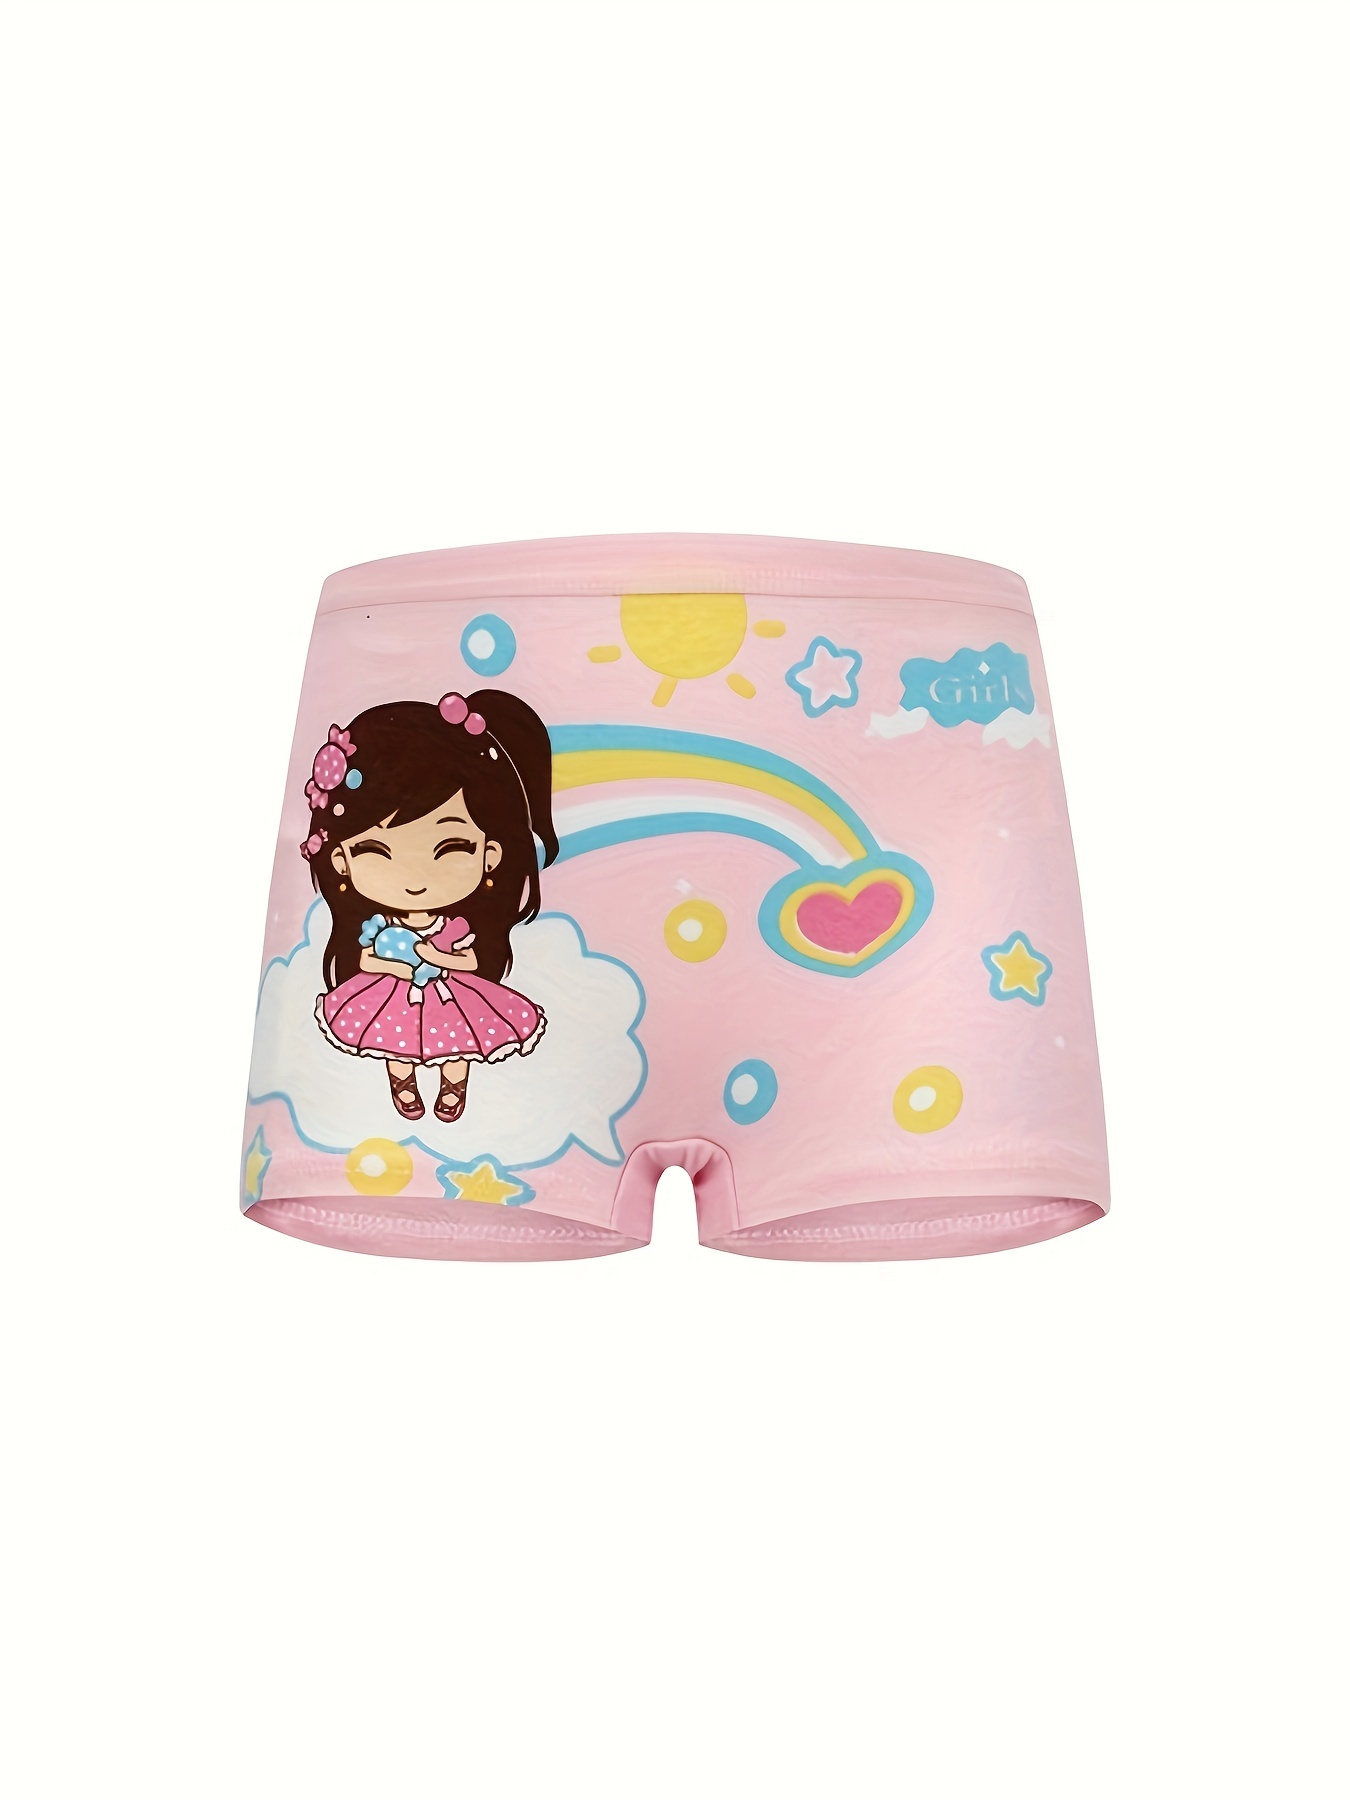 SMY 4pcs/lot Baby Kids Panties Cotton New Fashion Cartoon printed